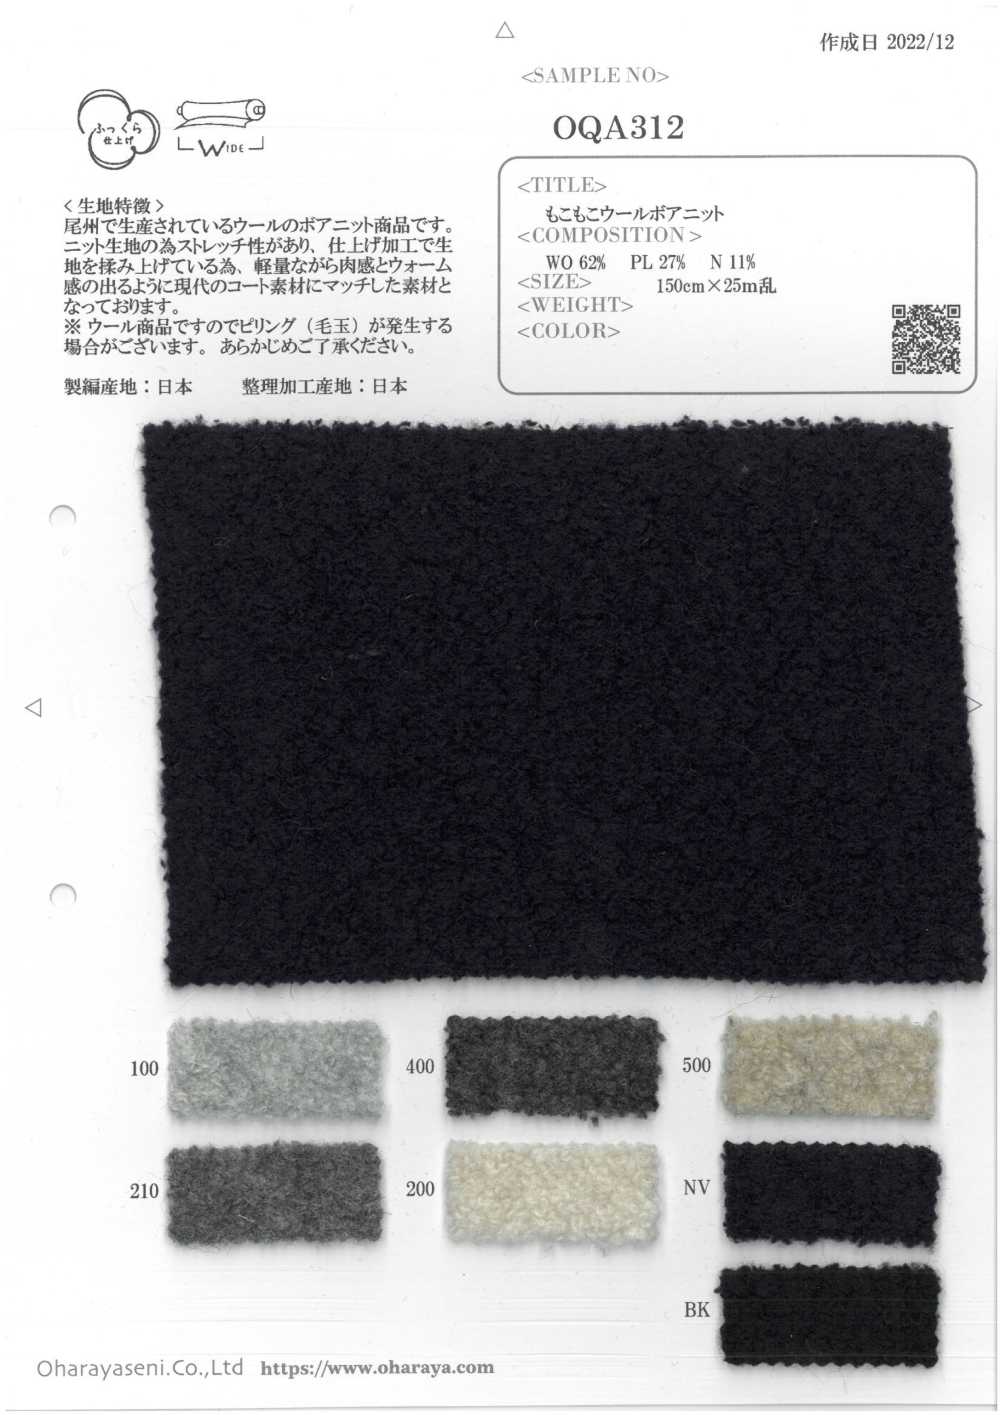 OQA312 Flauschiger Boa-Strick Aus Wolle[Textilgewebe] Oharayaseni